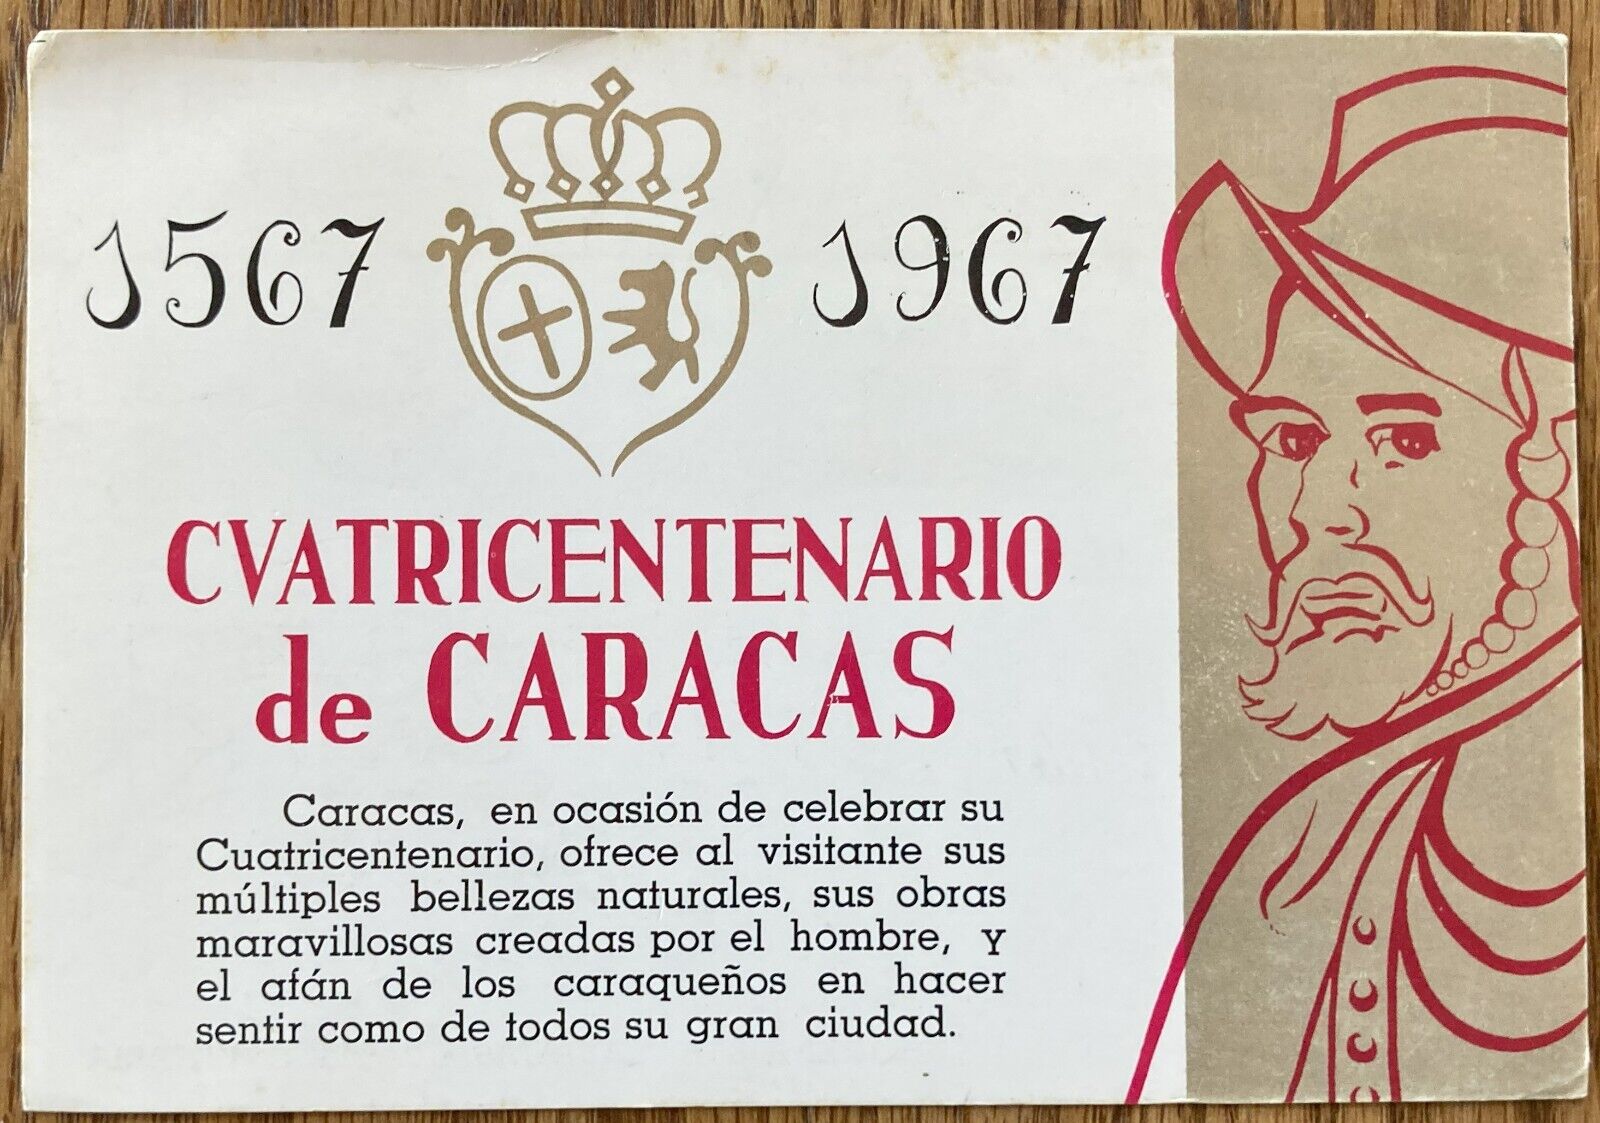 QSL Card - Maracay, Venezuela - Cvatricentenario de Caracas 1567-1967 4M4A  1967